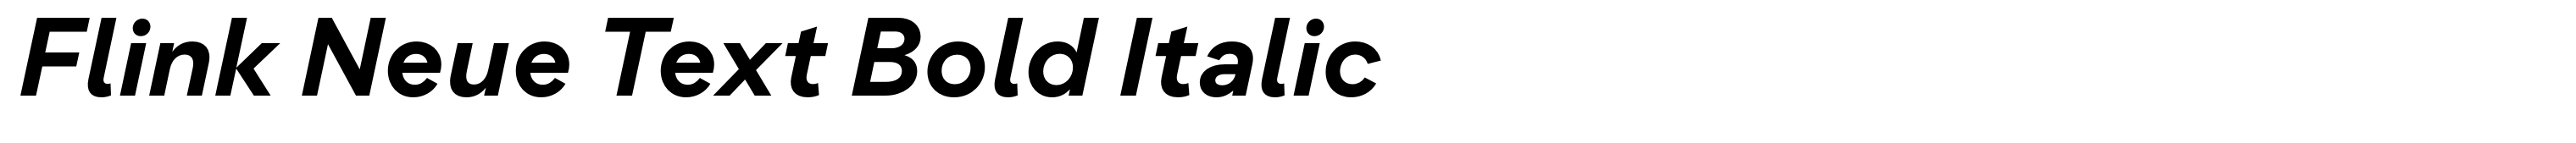 Flink Neue Text Bold Italic